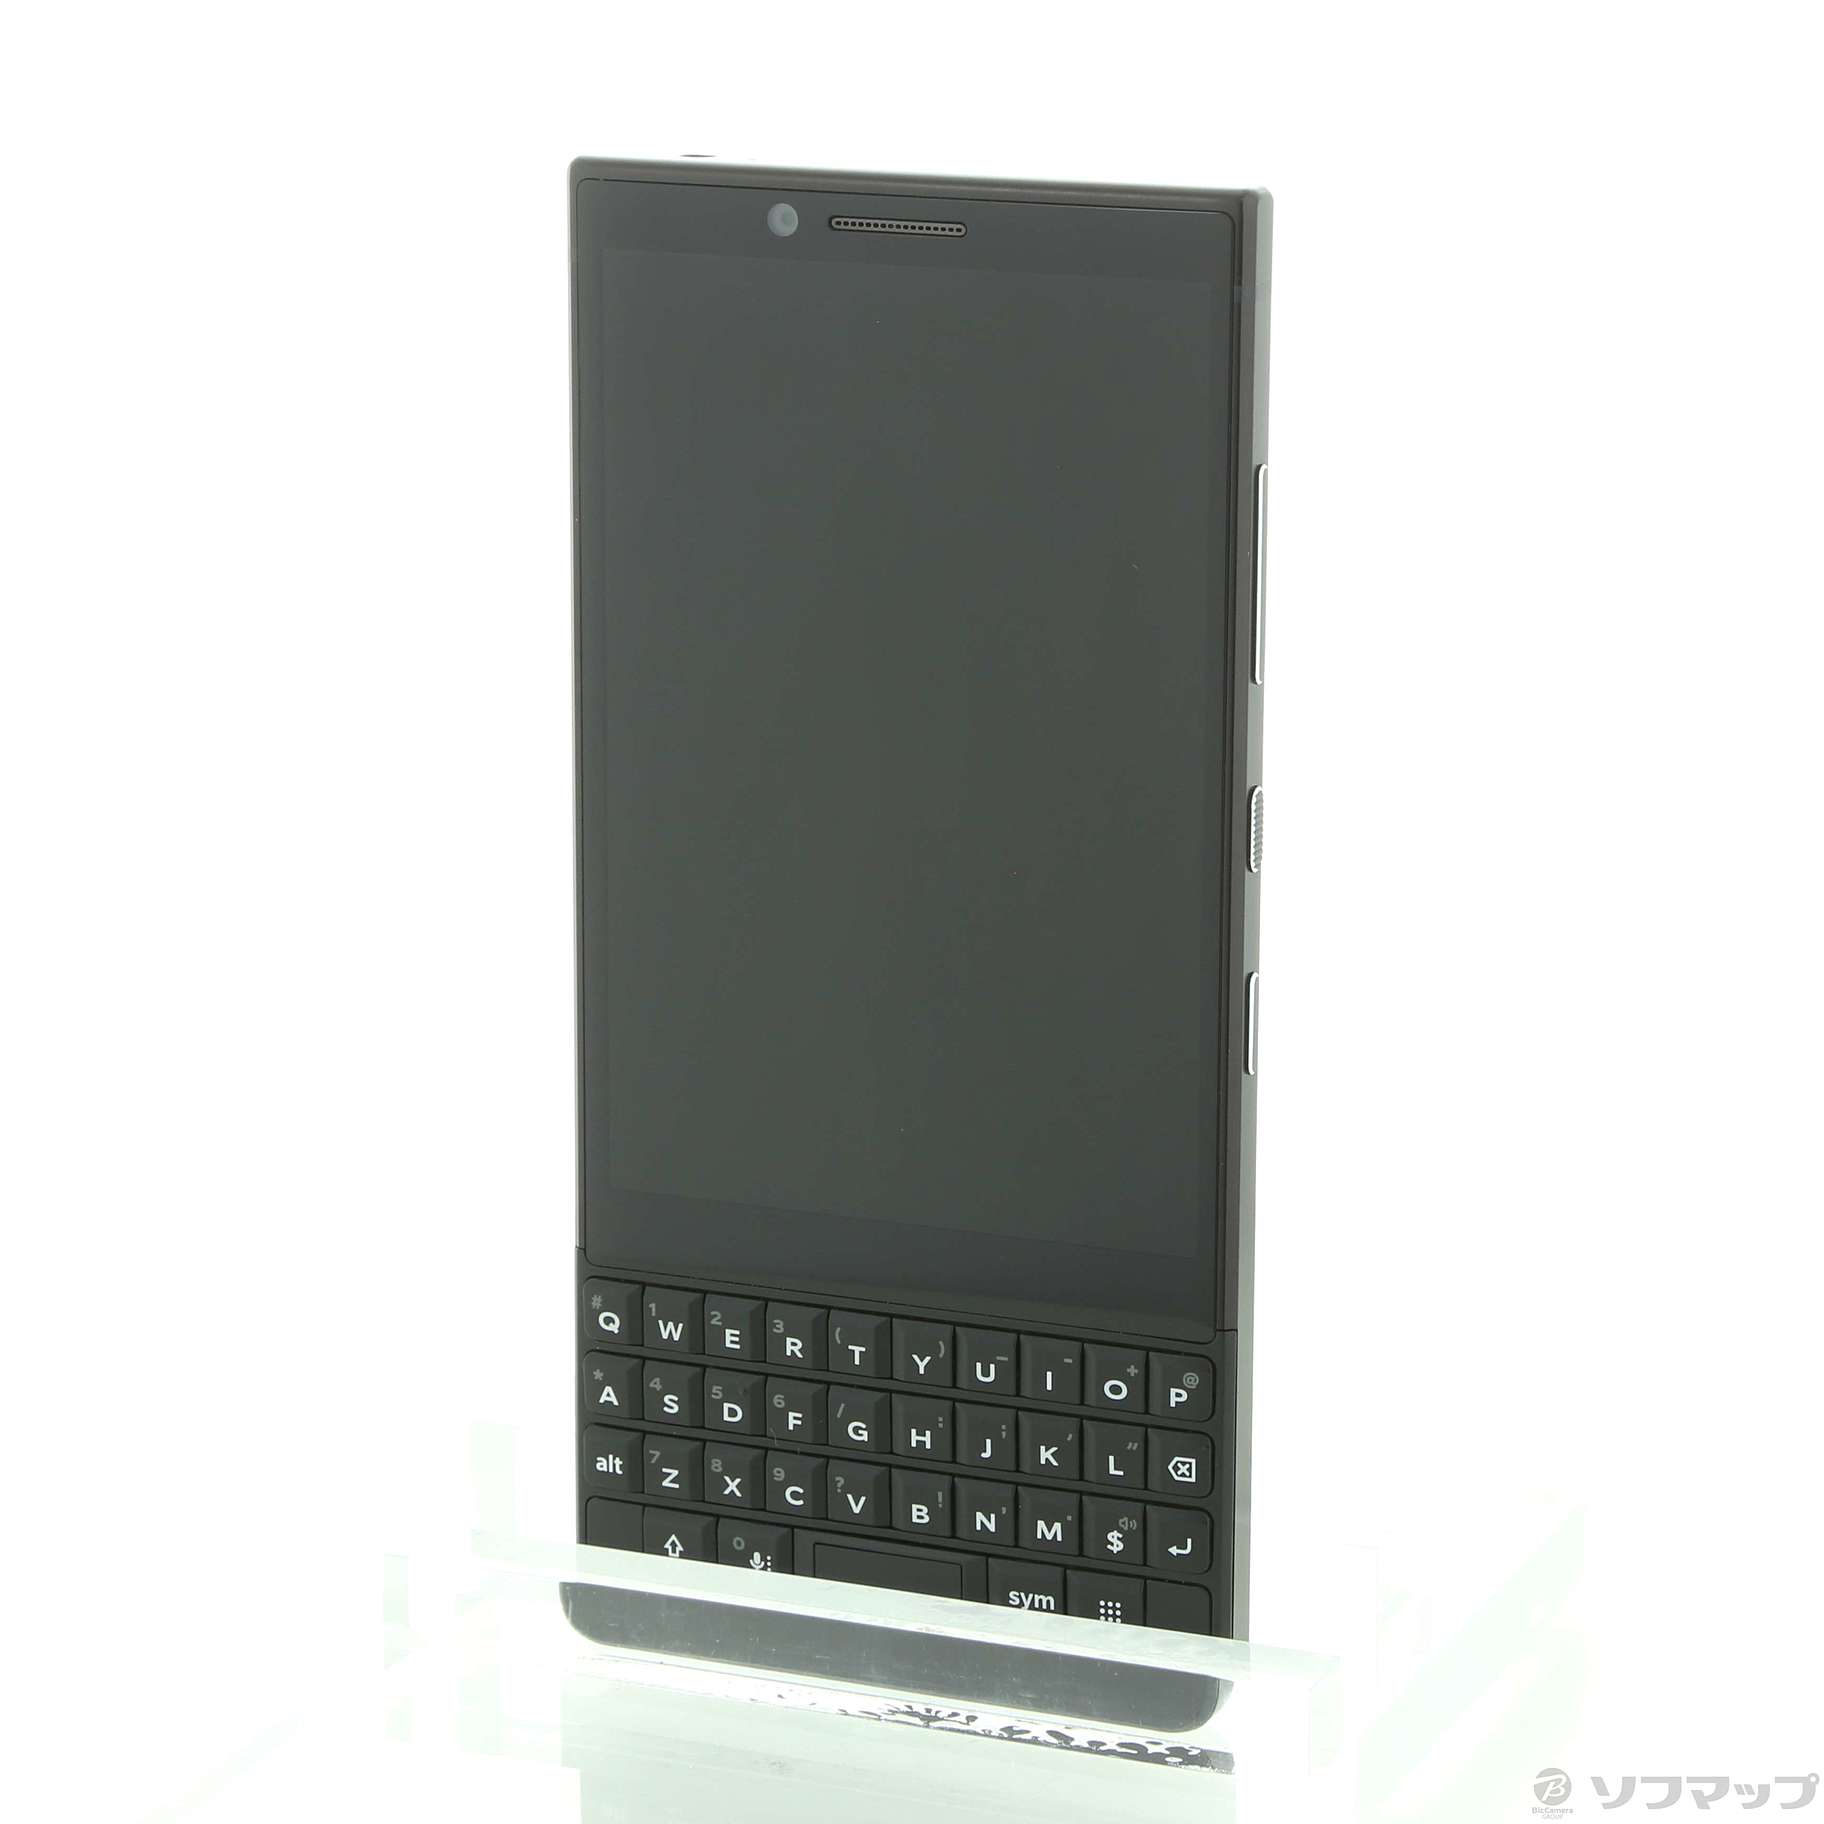 blackberry key2 128GB 美品